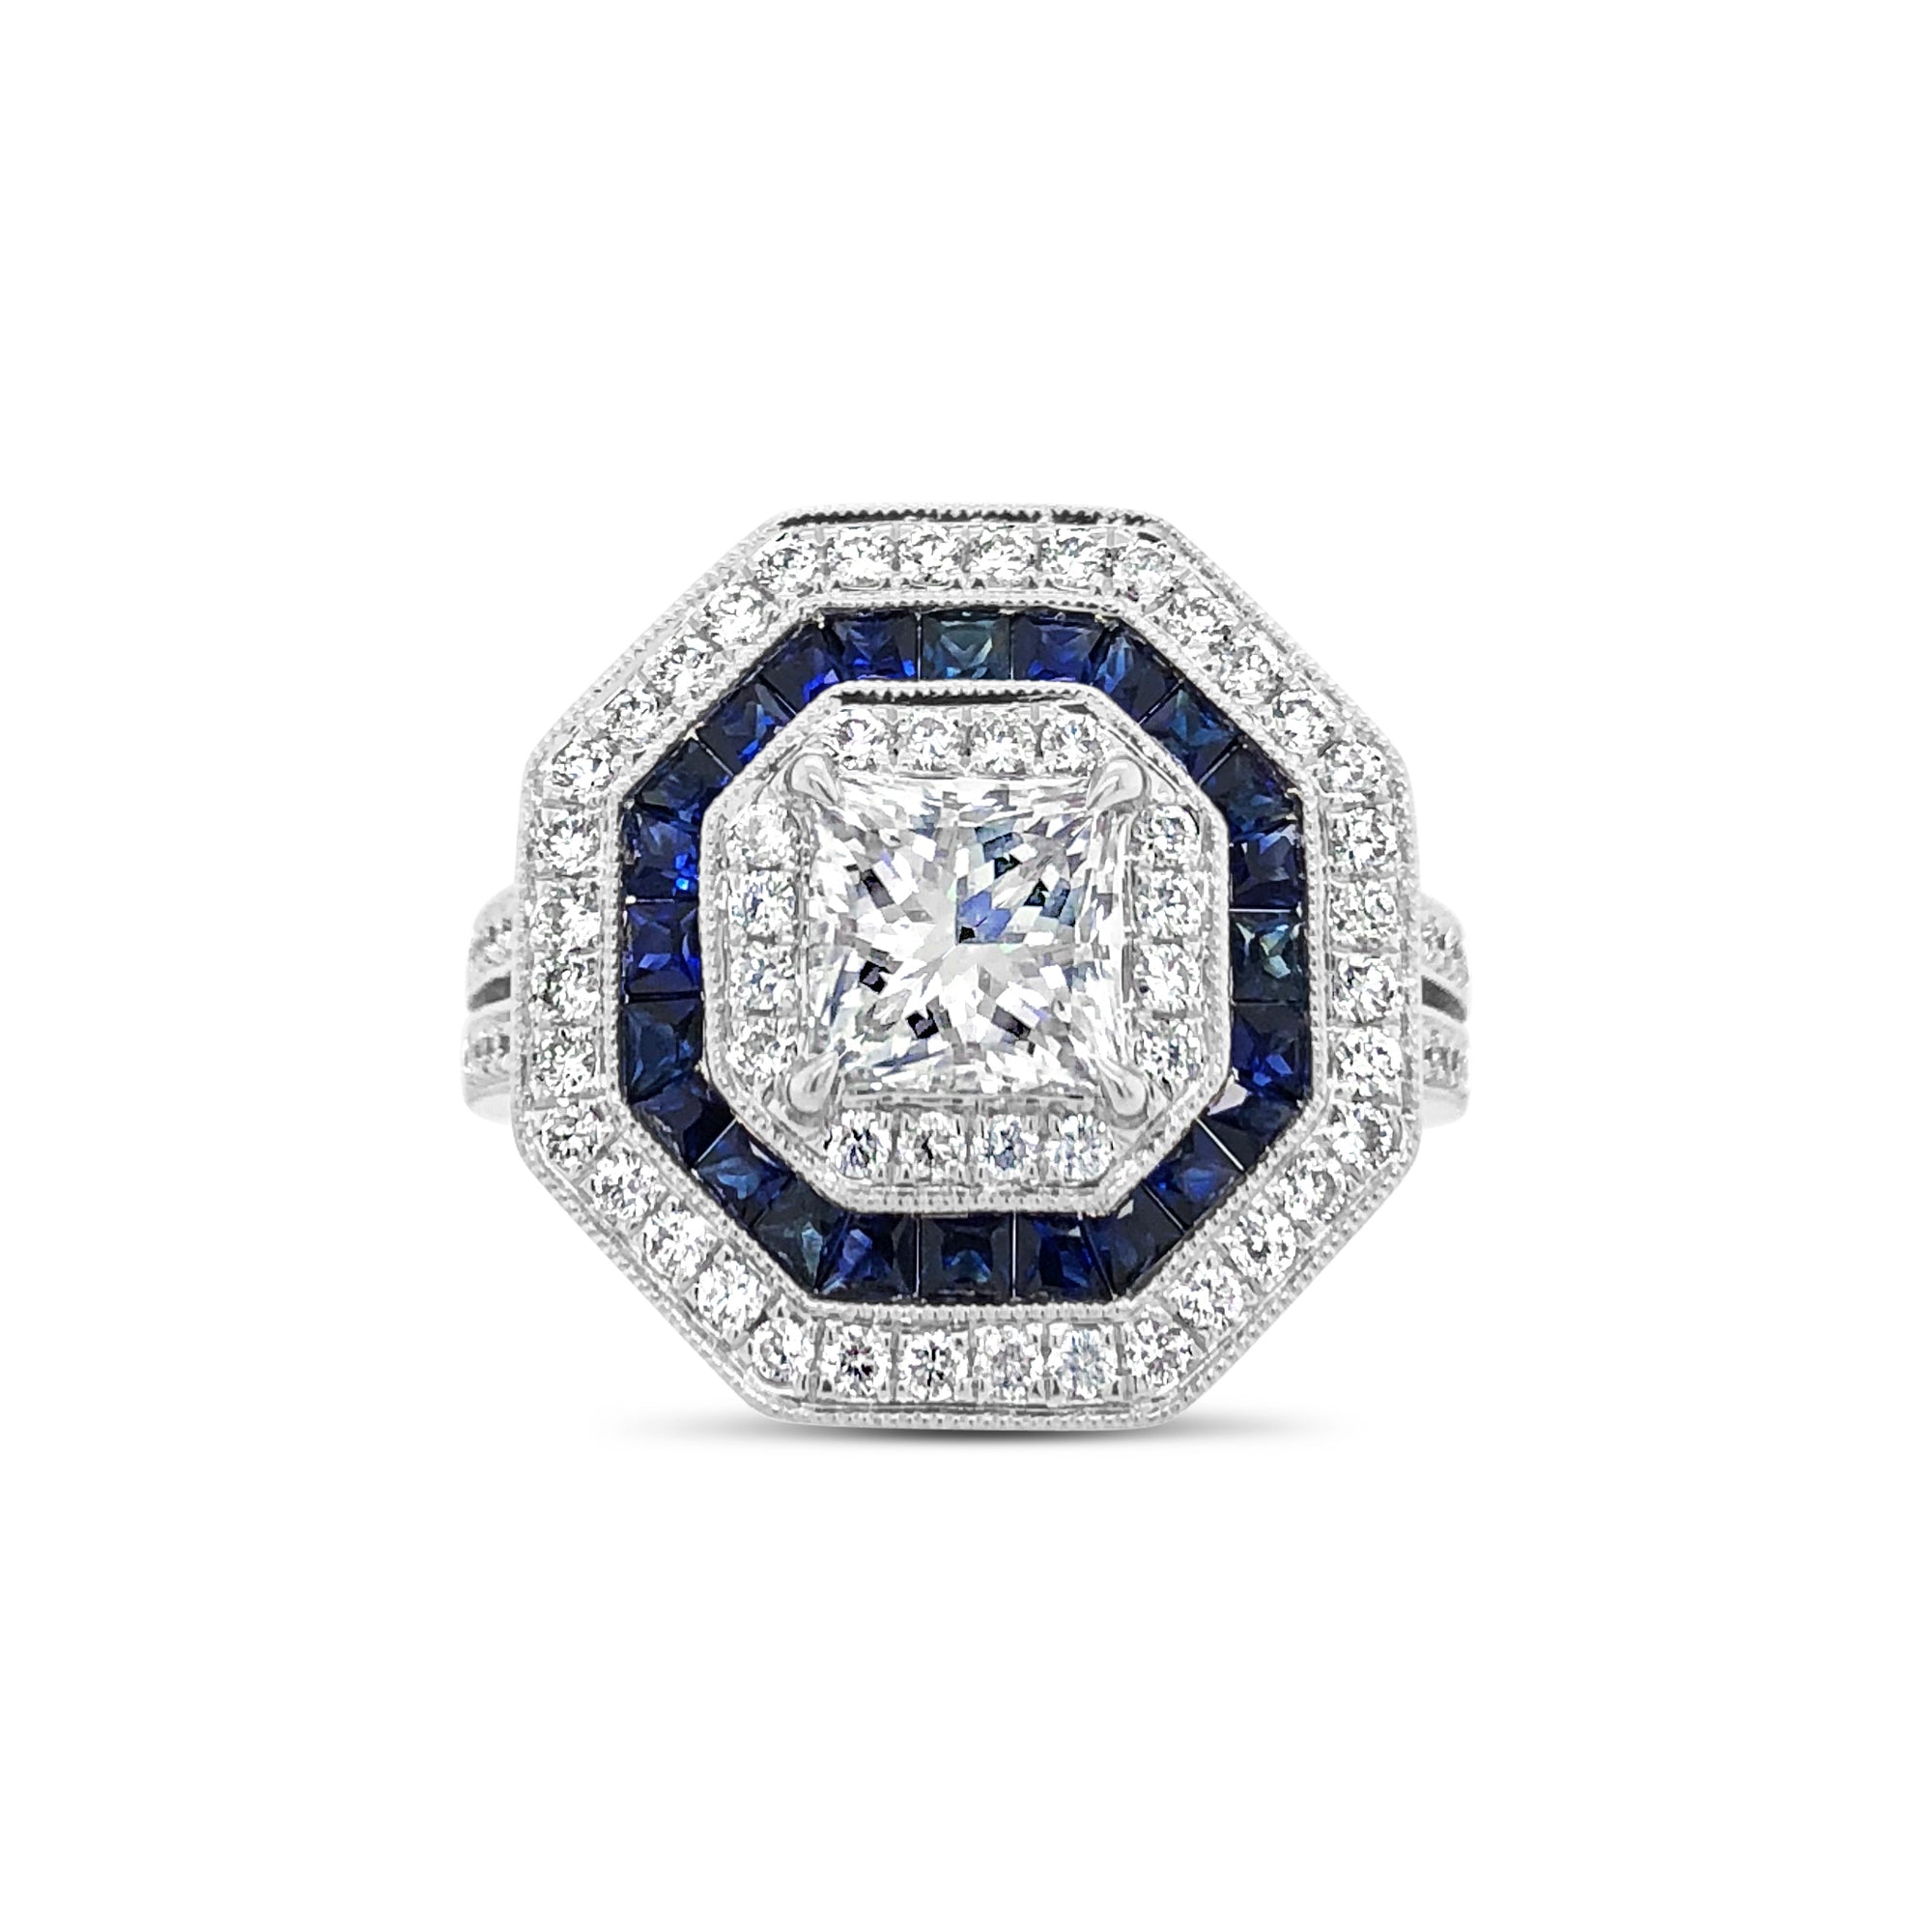 Octagonal Diamond & Sapphire Right Hand Ring  -18k gold weighing 8.13 grams  -84 round diamonds weighing .56 carats  -24 princess-cut sapphires weighing .89 carats  -1 princess-cut diamond weighing 1.13 carats with G-I2 (GIA clarity standards)